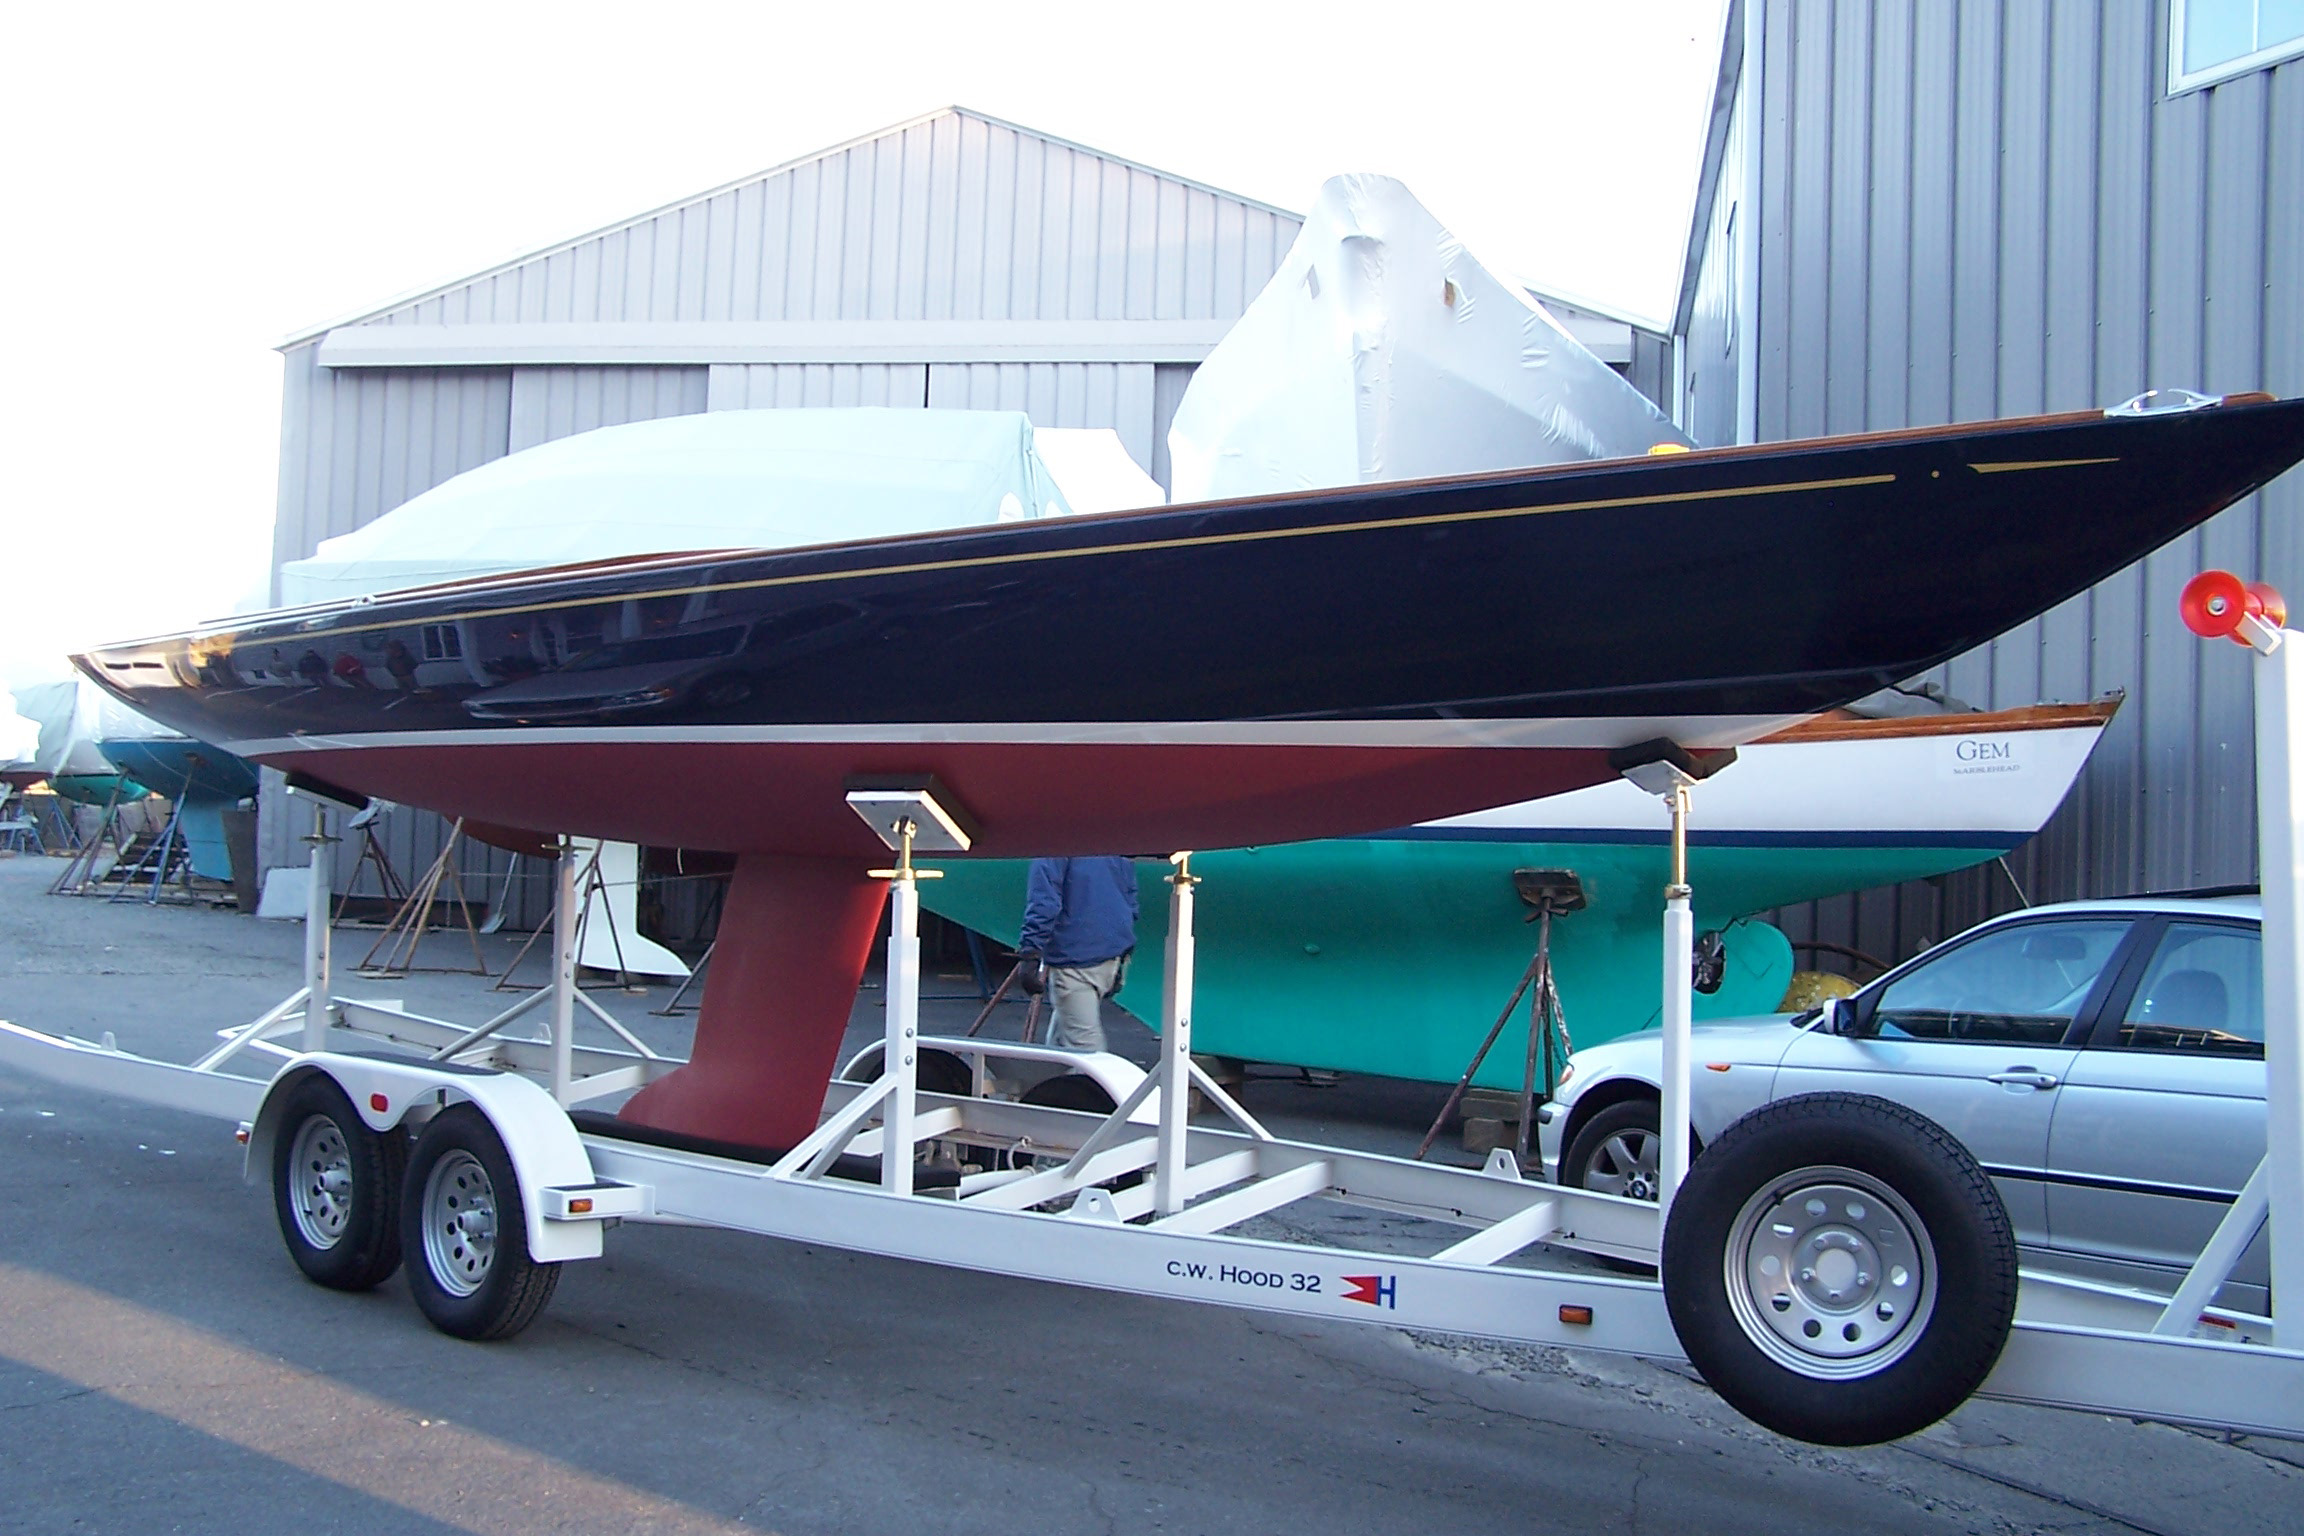 33 ft sailboat trailer